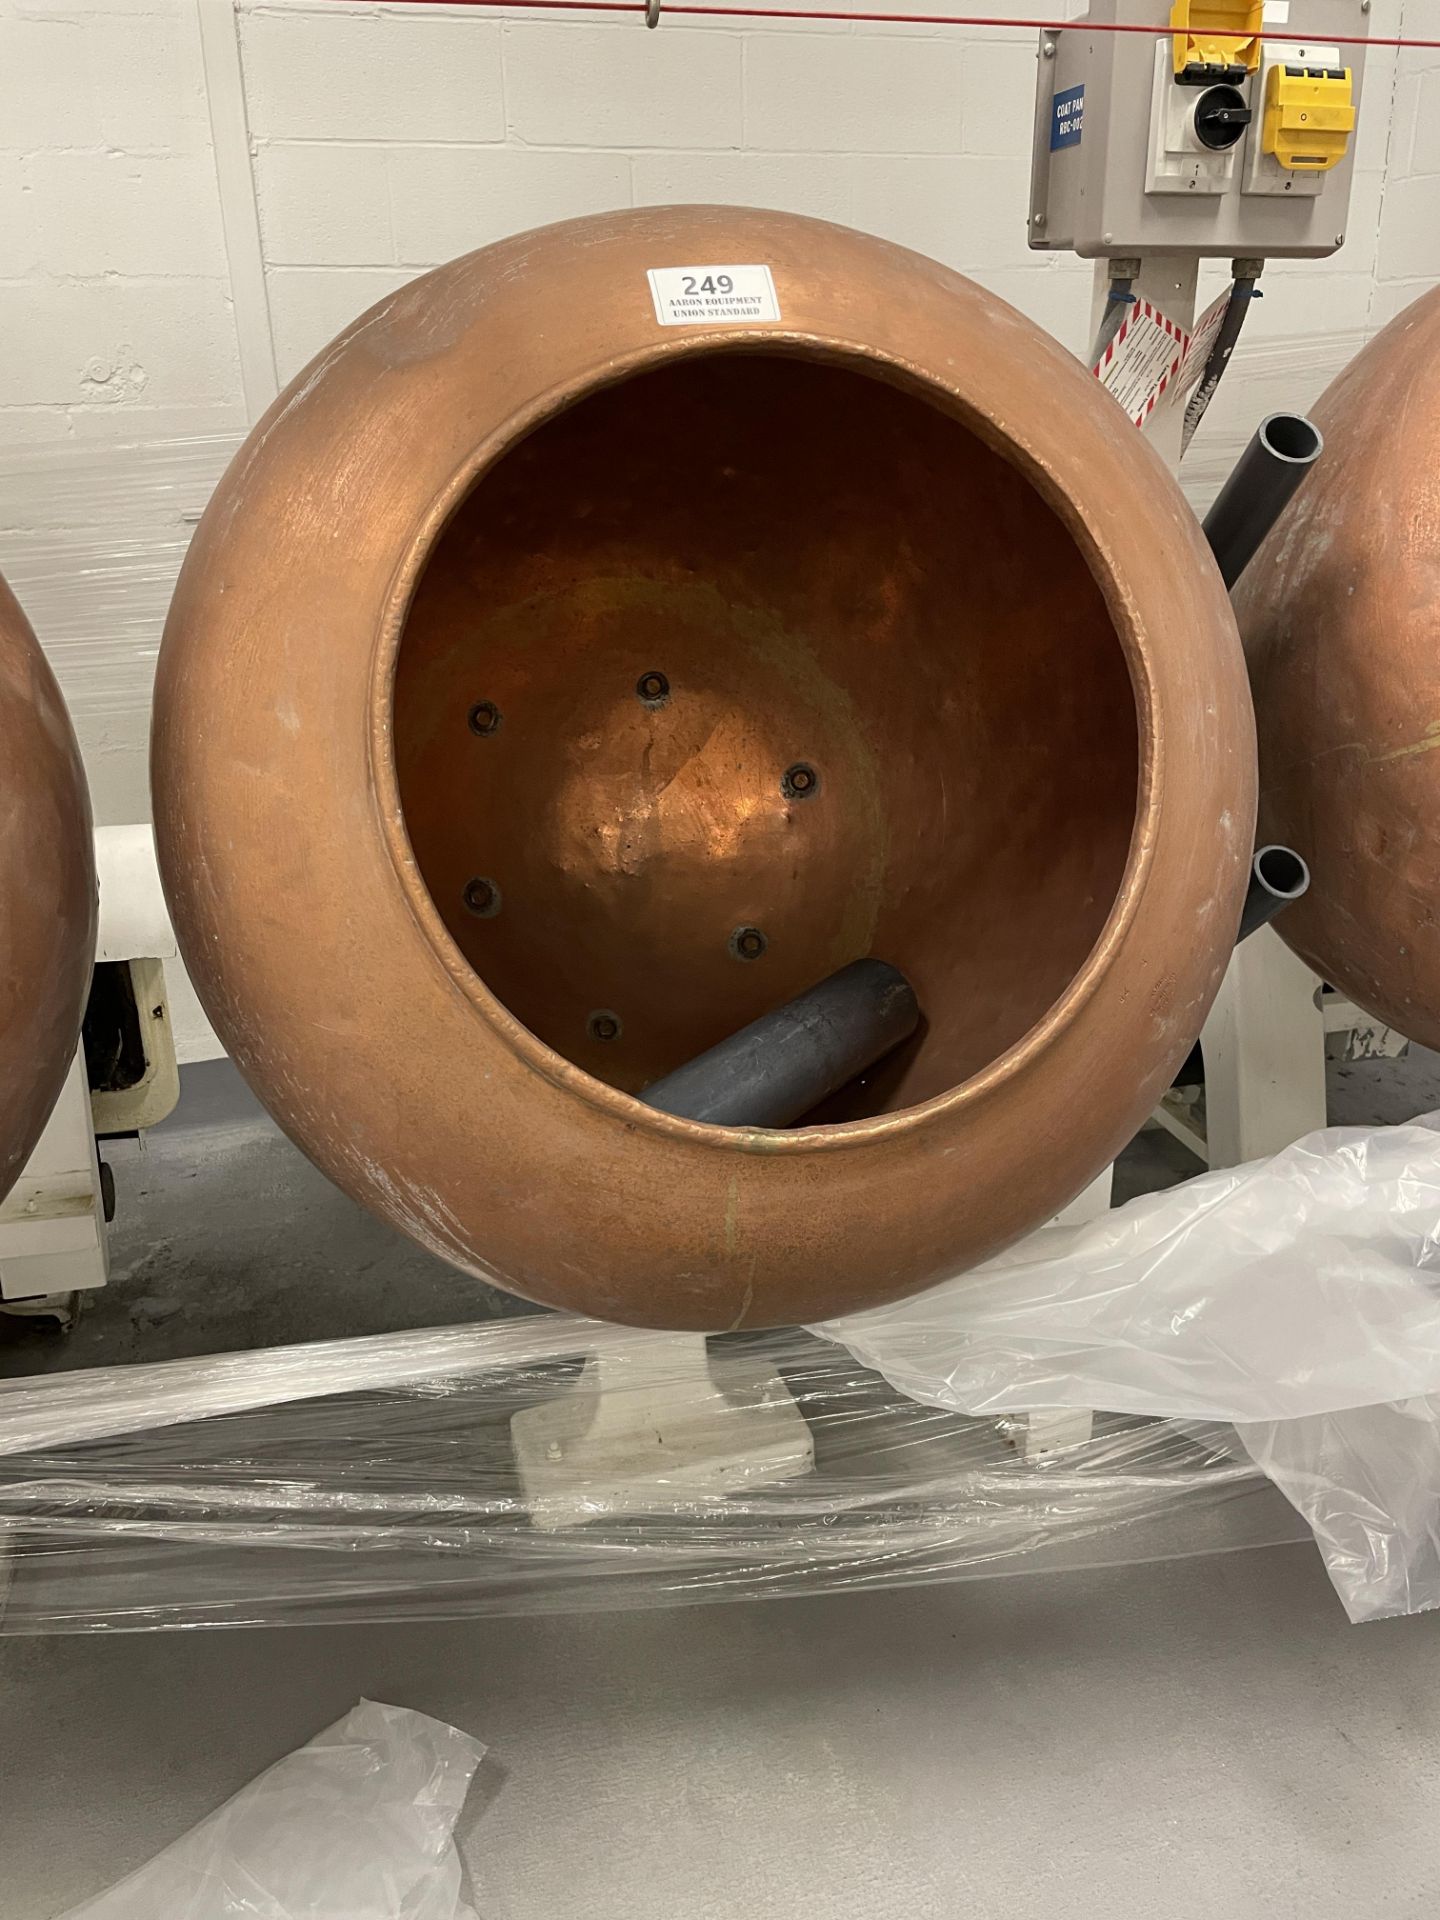 Asset 249 - Burkhard 38" diameter Copper Coating Pan with 34" deep x 24" diameter opening bowl on